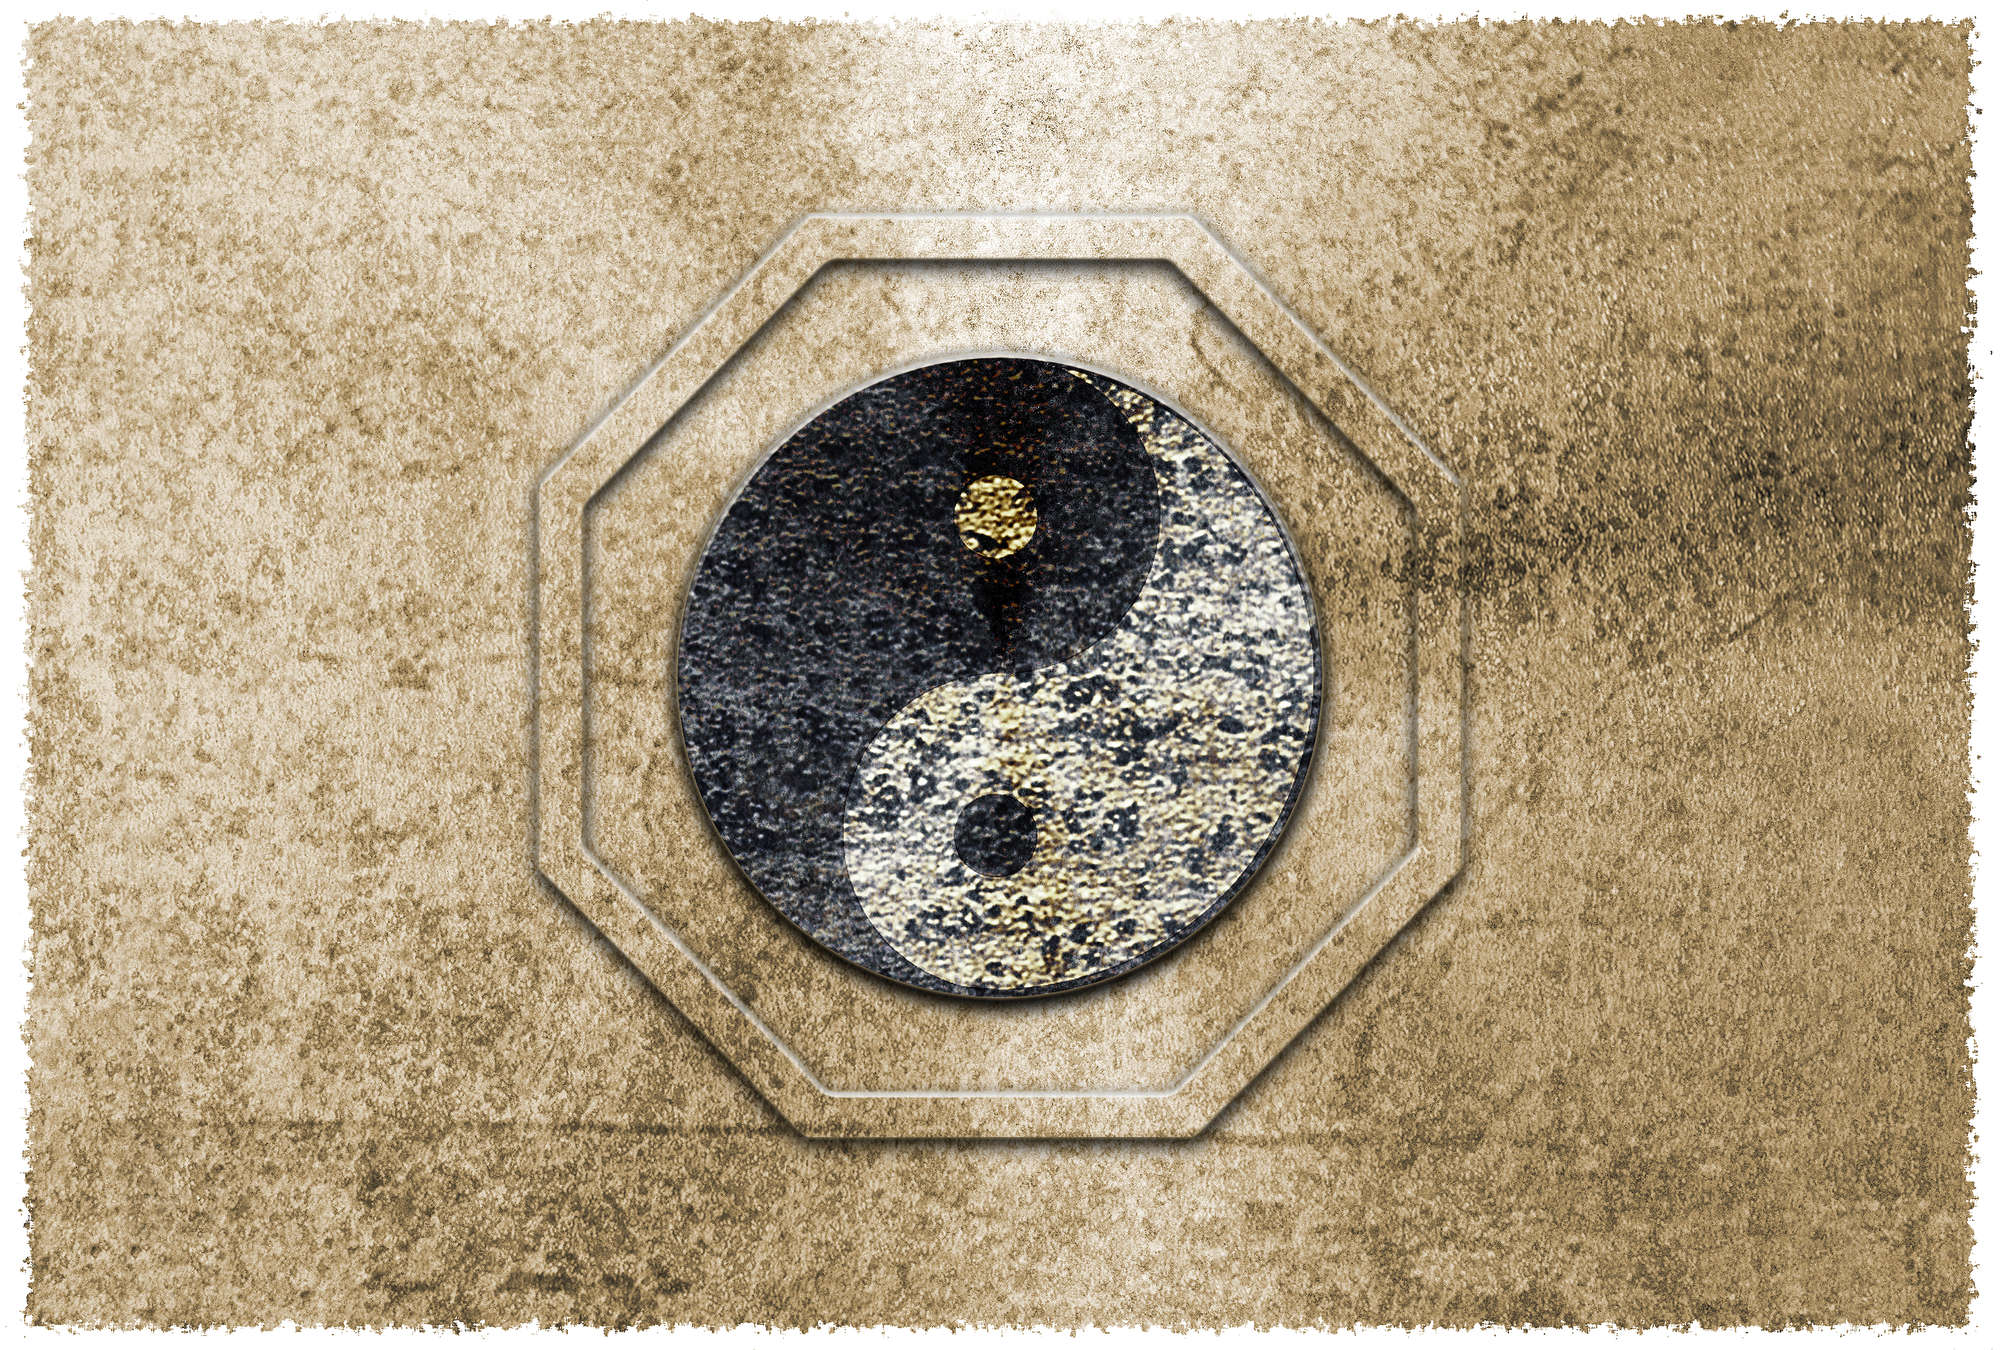             Photo wallpaper Yin&Yang, Asian symbol & gold accent - Brown, Black, White
        